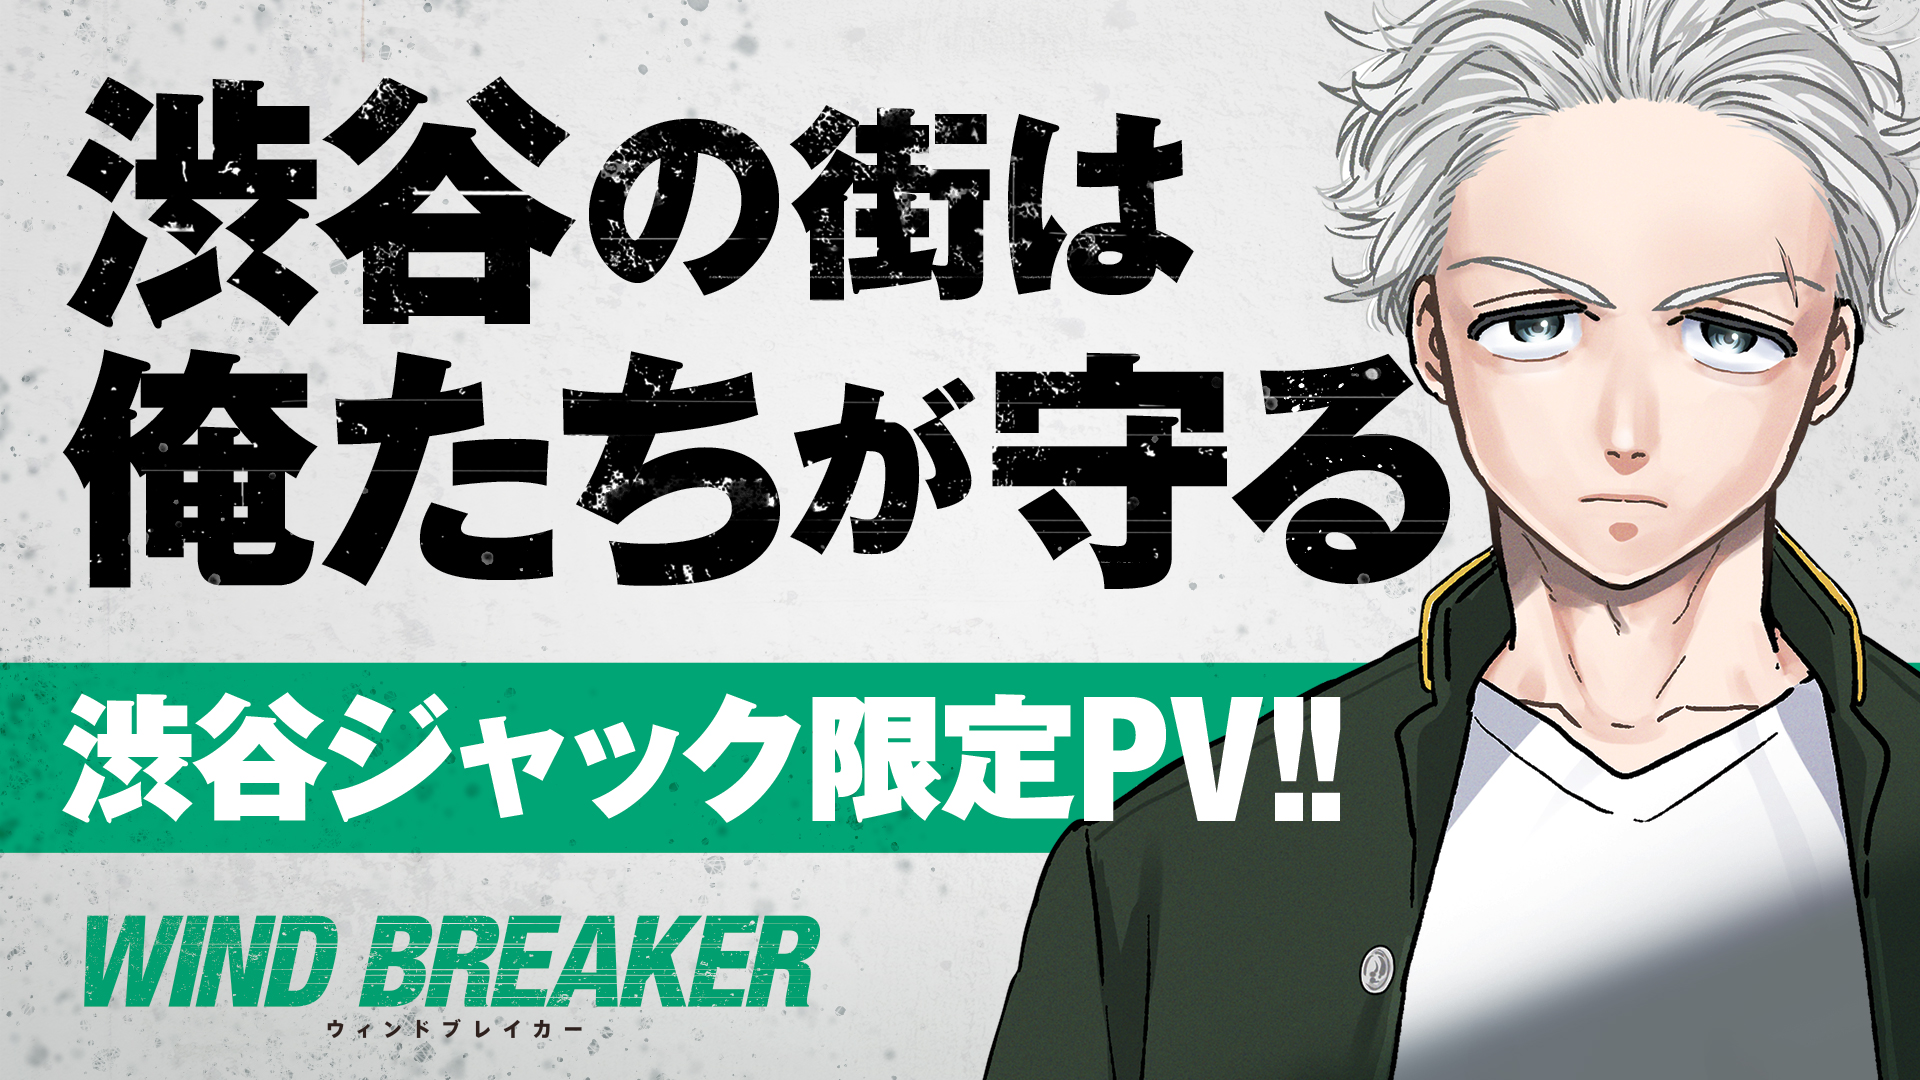 「WIND BREAKER」渋谷ジャック限定PV公開に「ちゃんと聴けて嬉しい」「声優豪華だ」